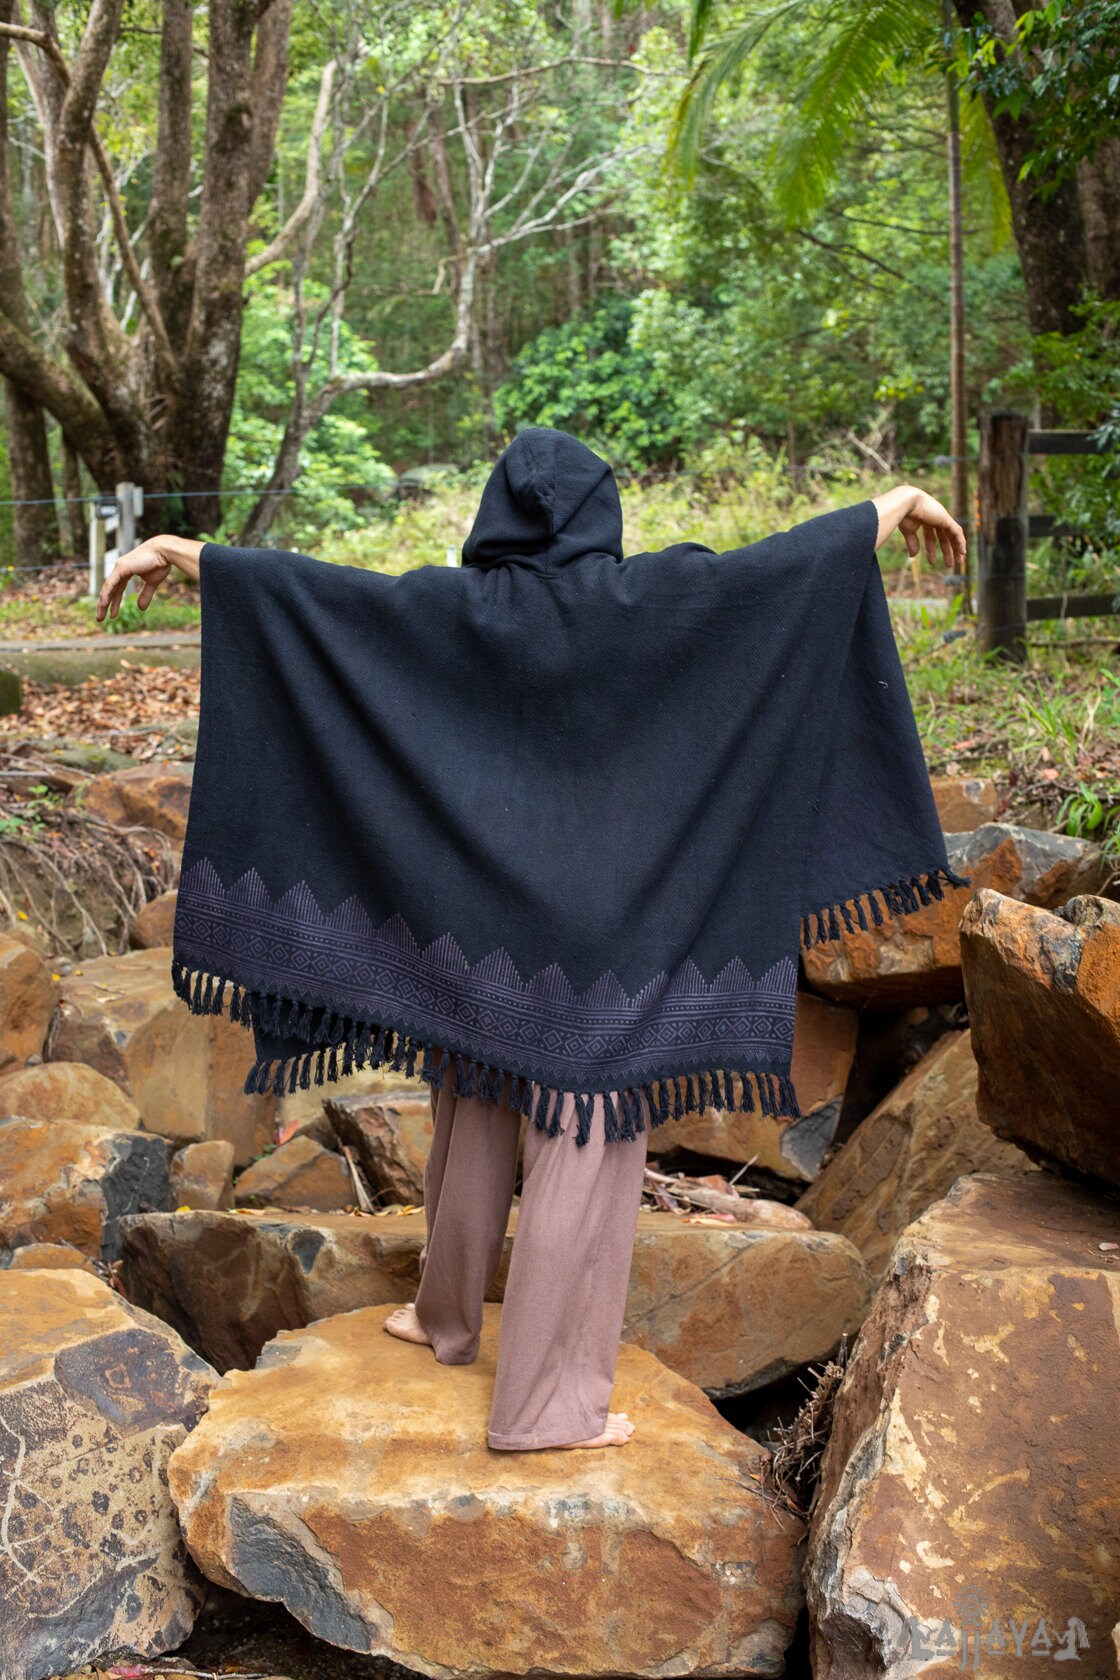 ANAGAMI Black Hooded Kimono Cape Poncho Robe Block Printed Natural Dyed Ceremony Ritual Shaman Tribal Alchemy Sacred Shawl Festival AJJAYA